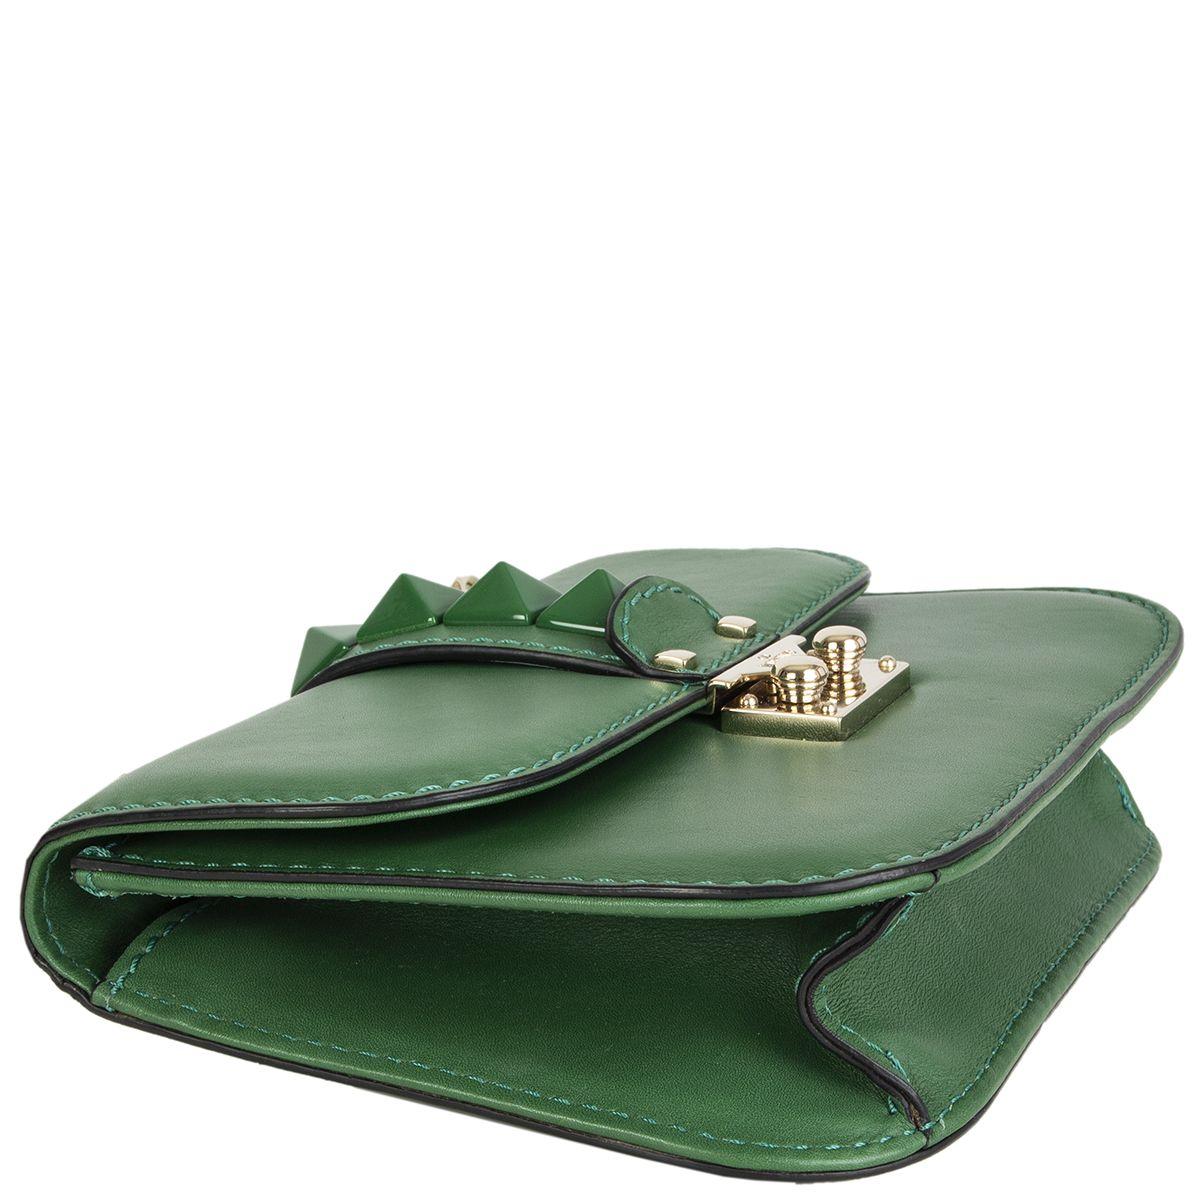 emerald green handbag